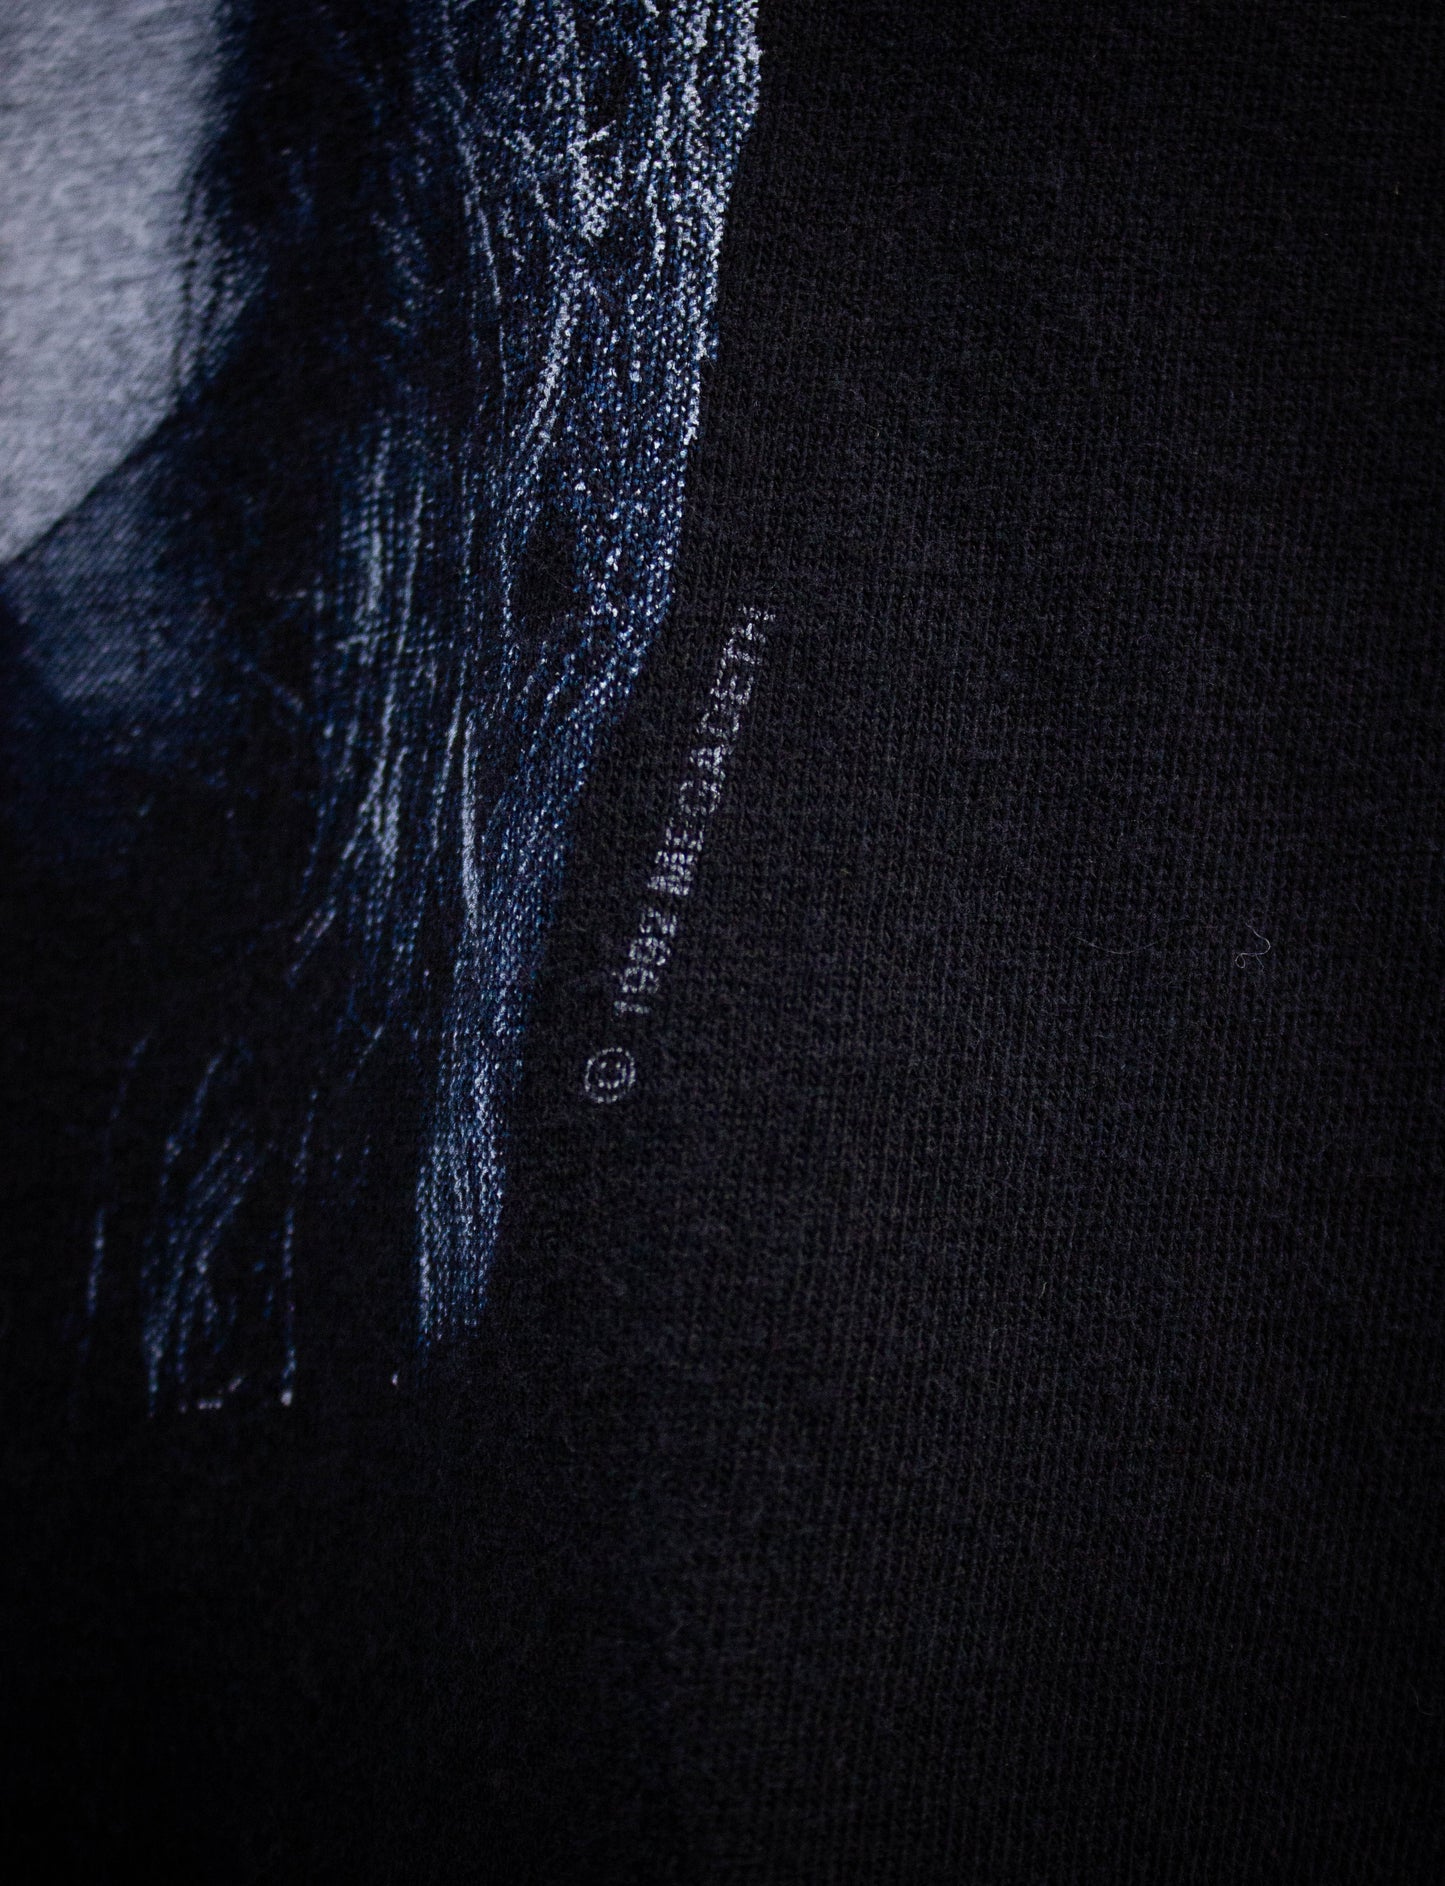 Vintage Megadeth Countdown to Extinction Concert T Shirt 90s Black Medium